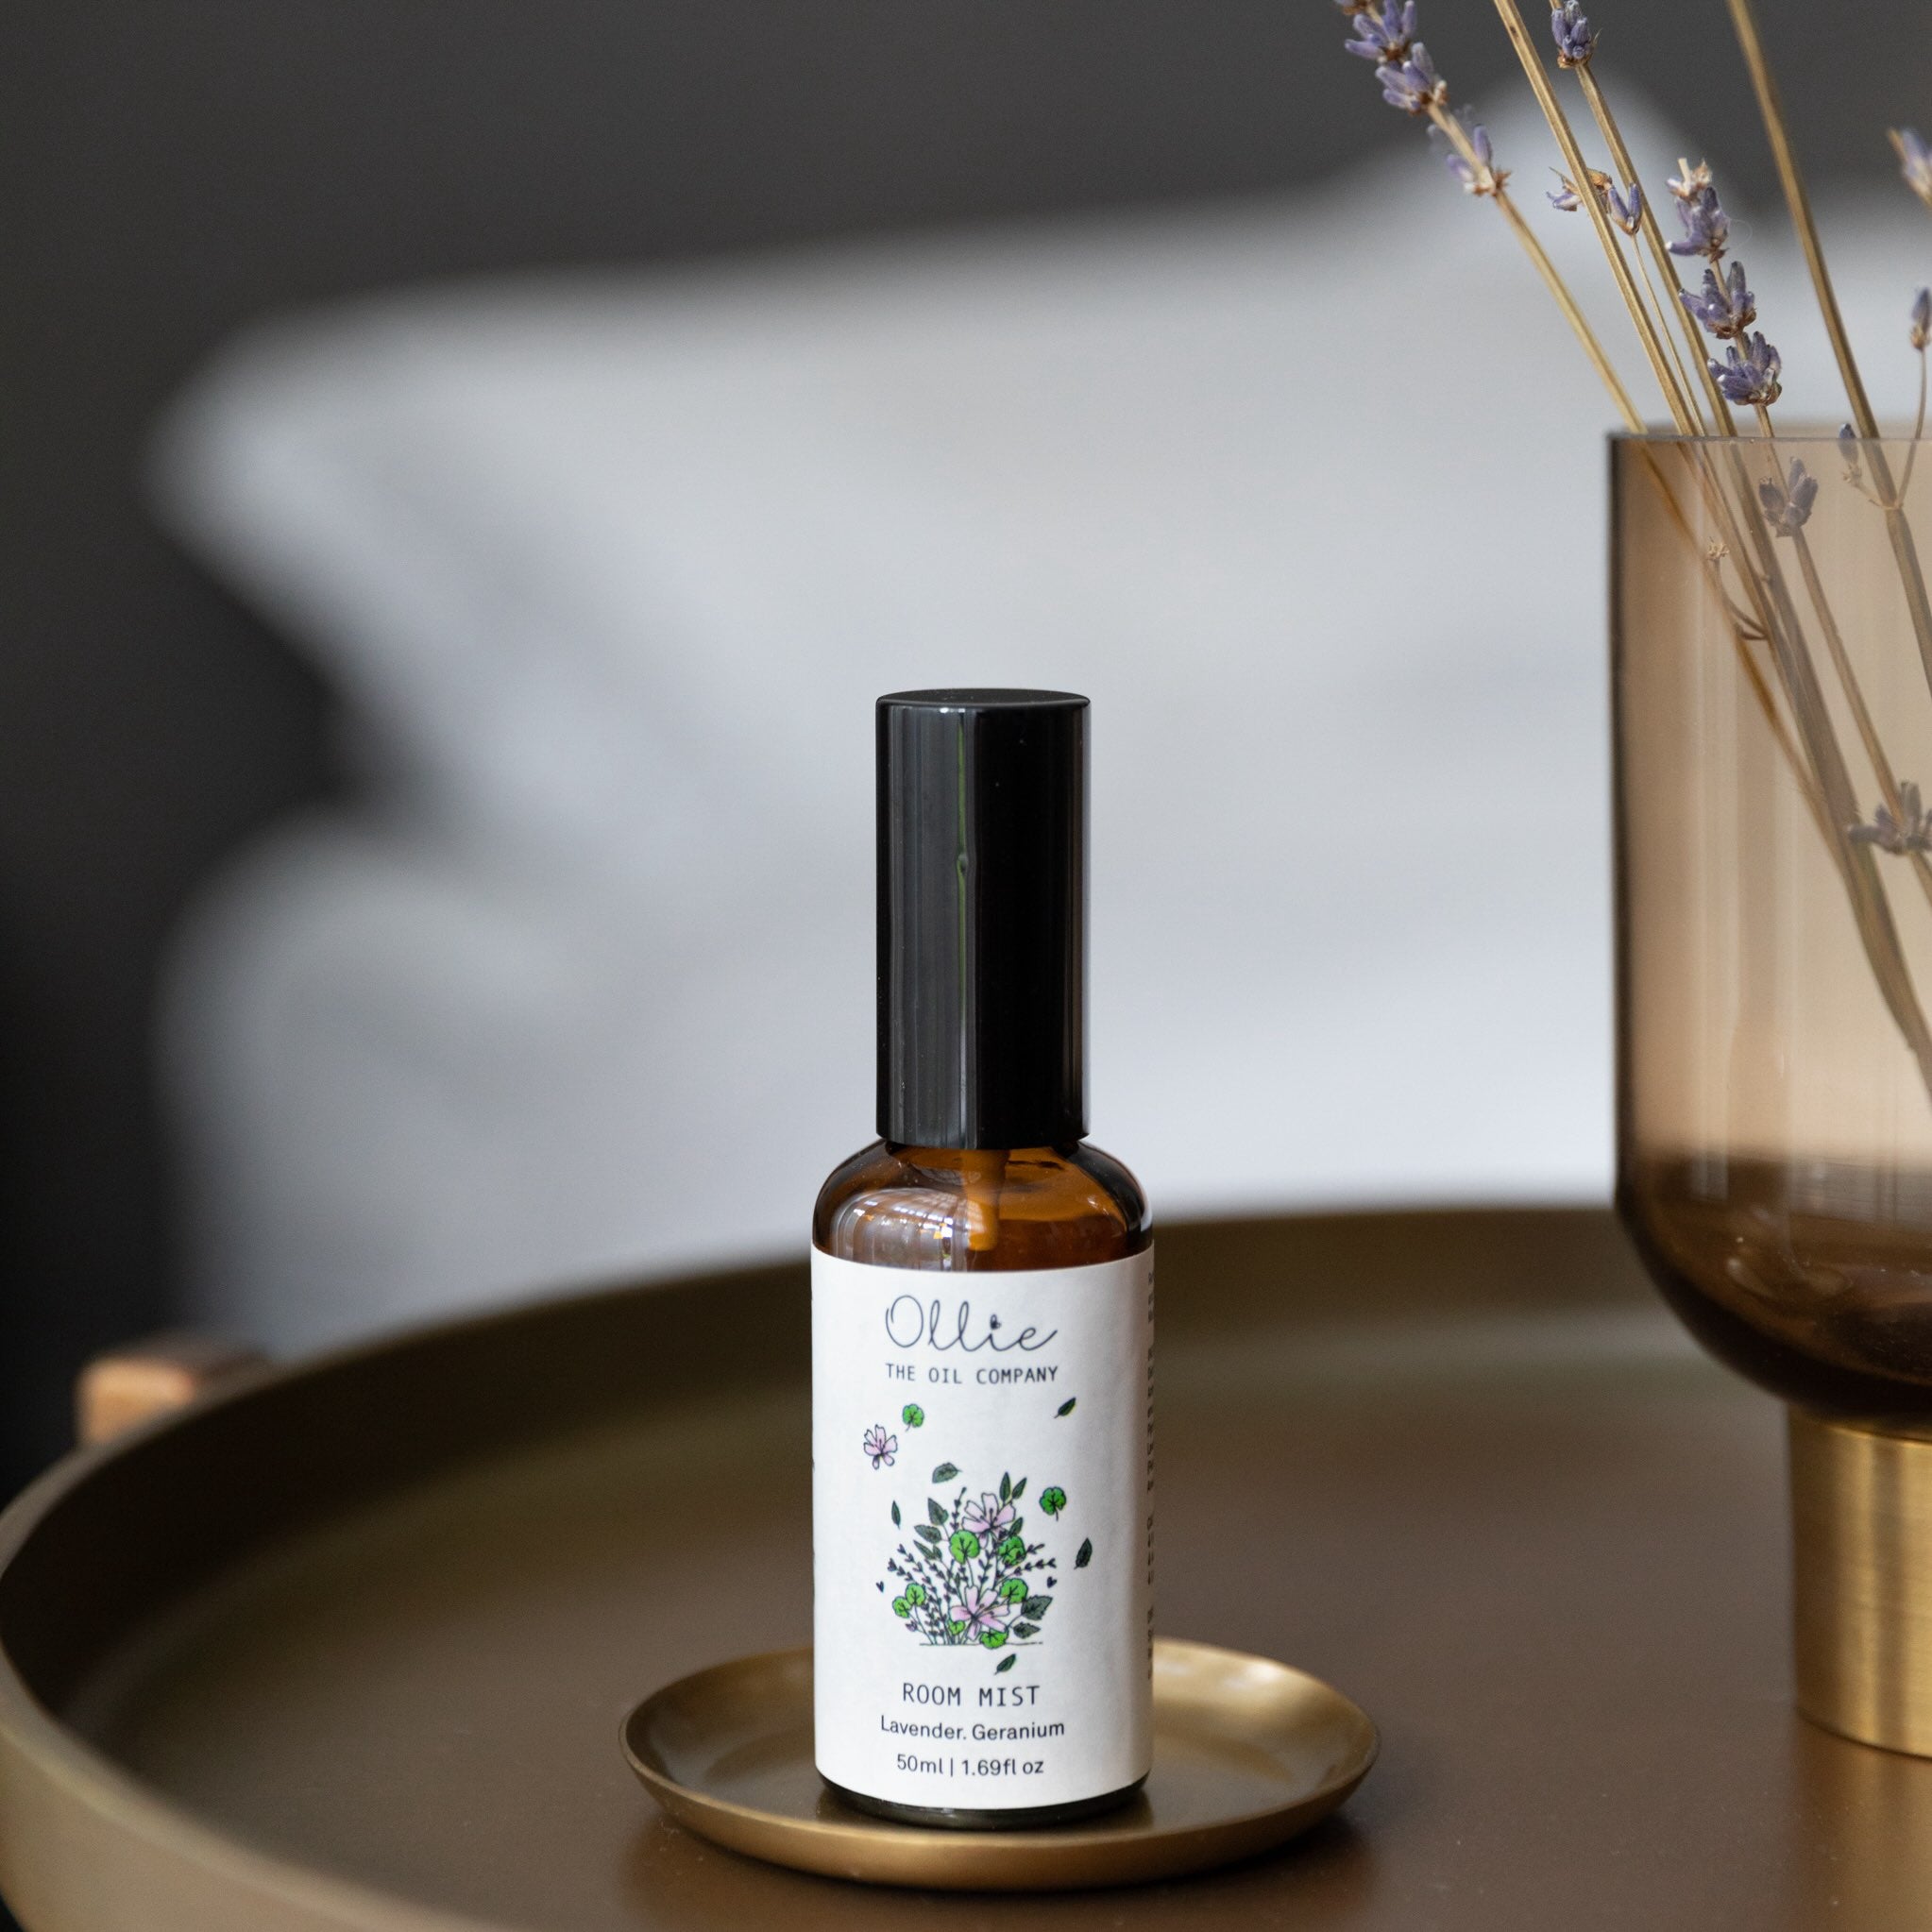 Ollie Room Mist | Home fragrances | The Green Collective SG